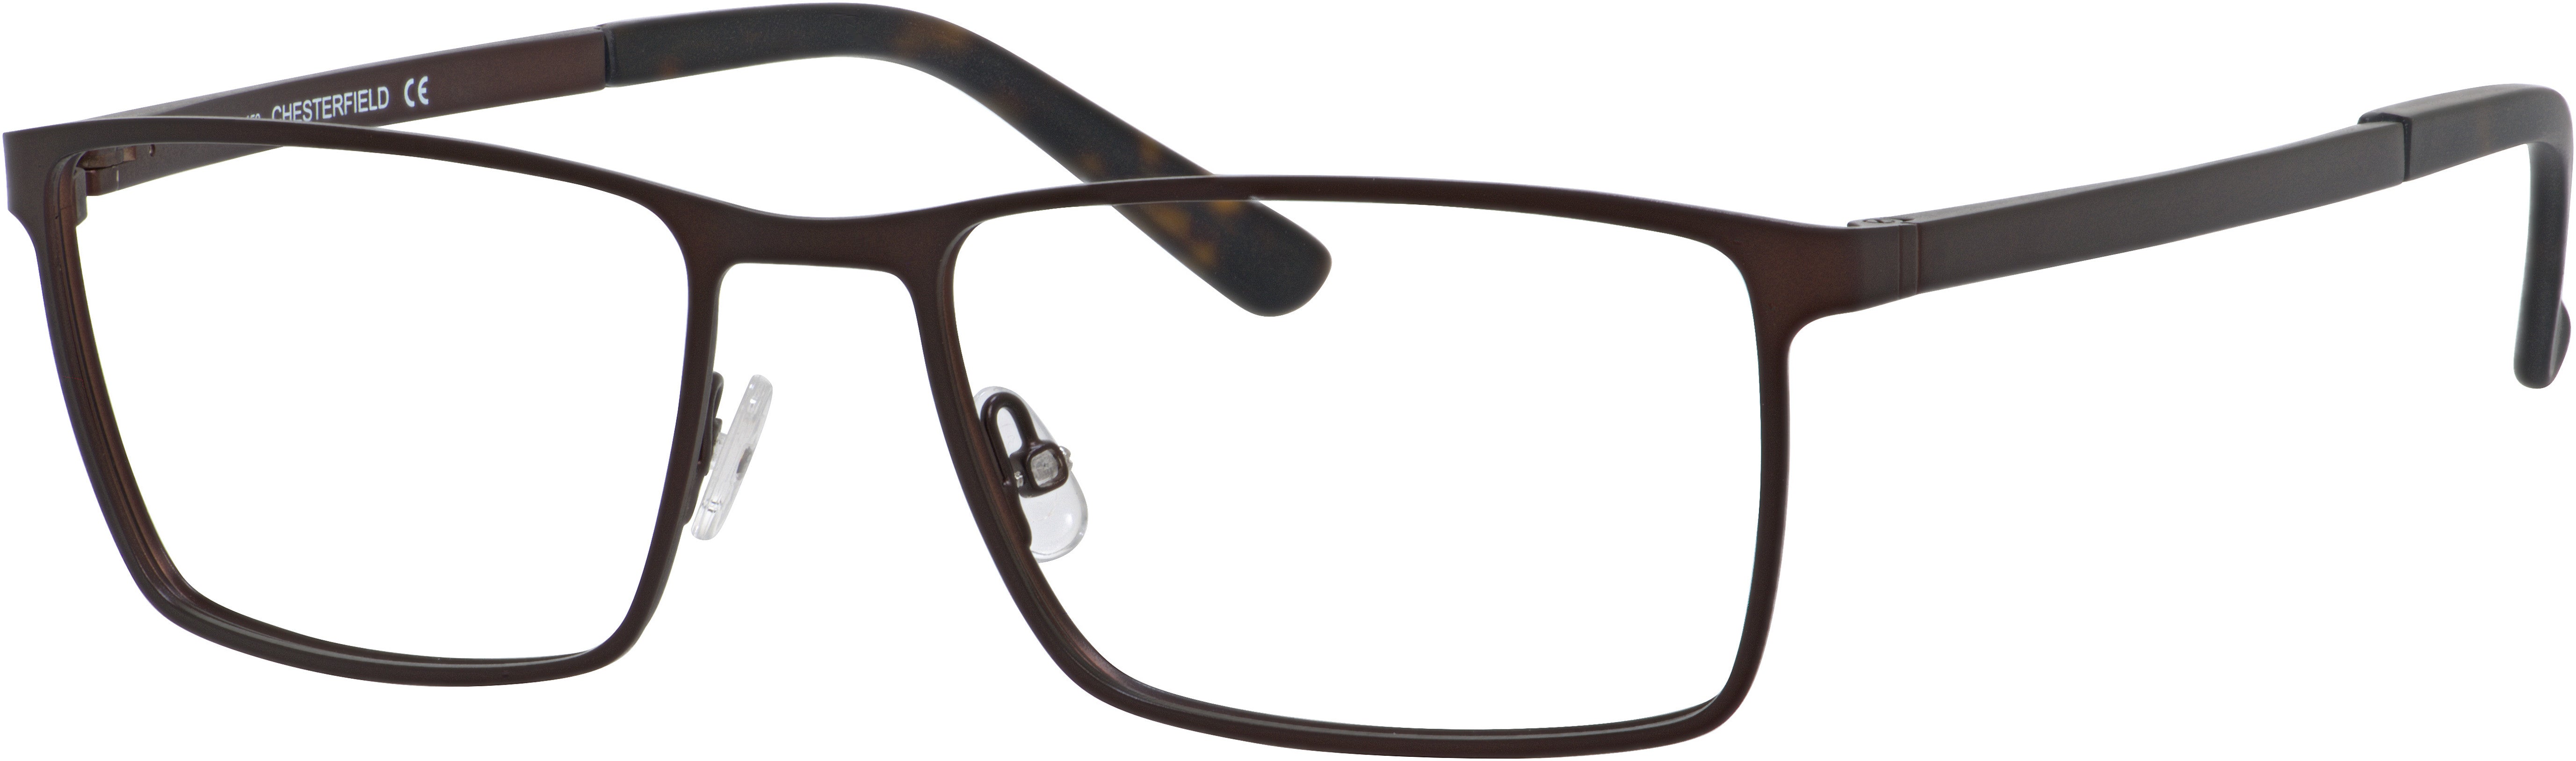  Chesterfield 55XL Rectangular Eyeglasses 0R0Z-0R0Z  Dark Brown (00 Demo Lens)